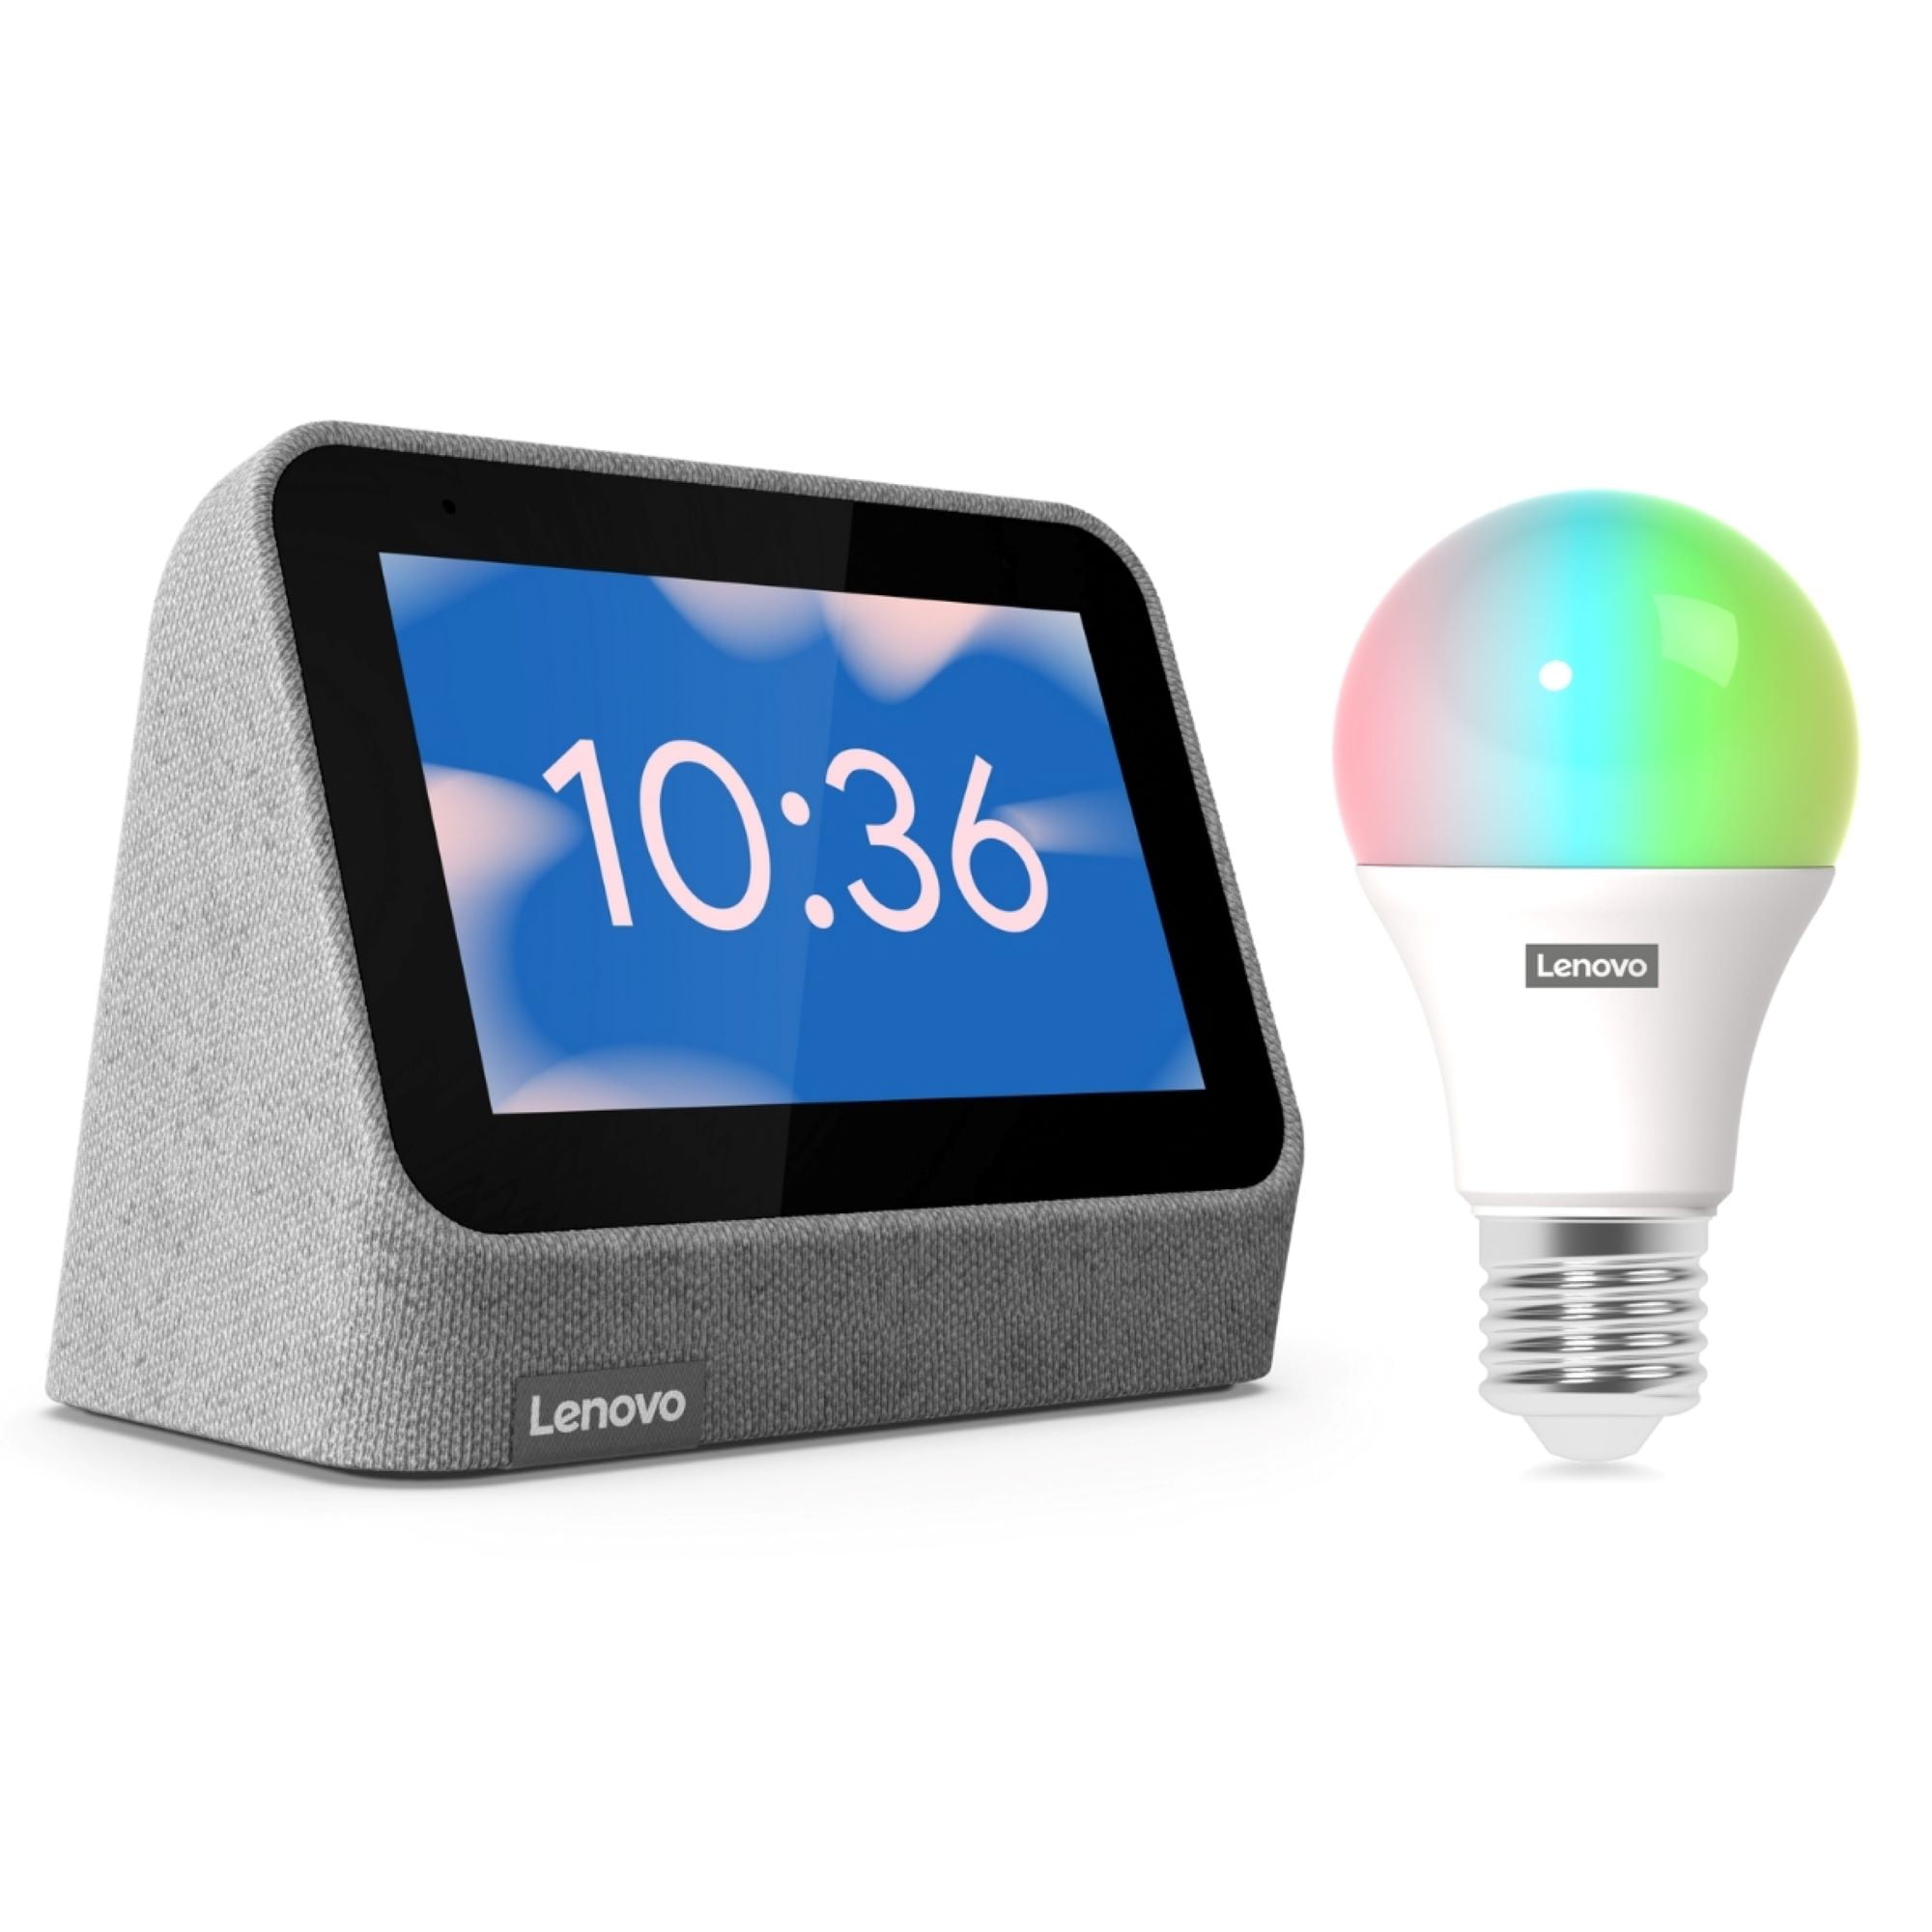 (YMMV) Lenovo Smart Home Starter Kit: Smart Clock Gen 2 + Color Smart Bulb $15 @ Walmart B&M